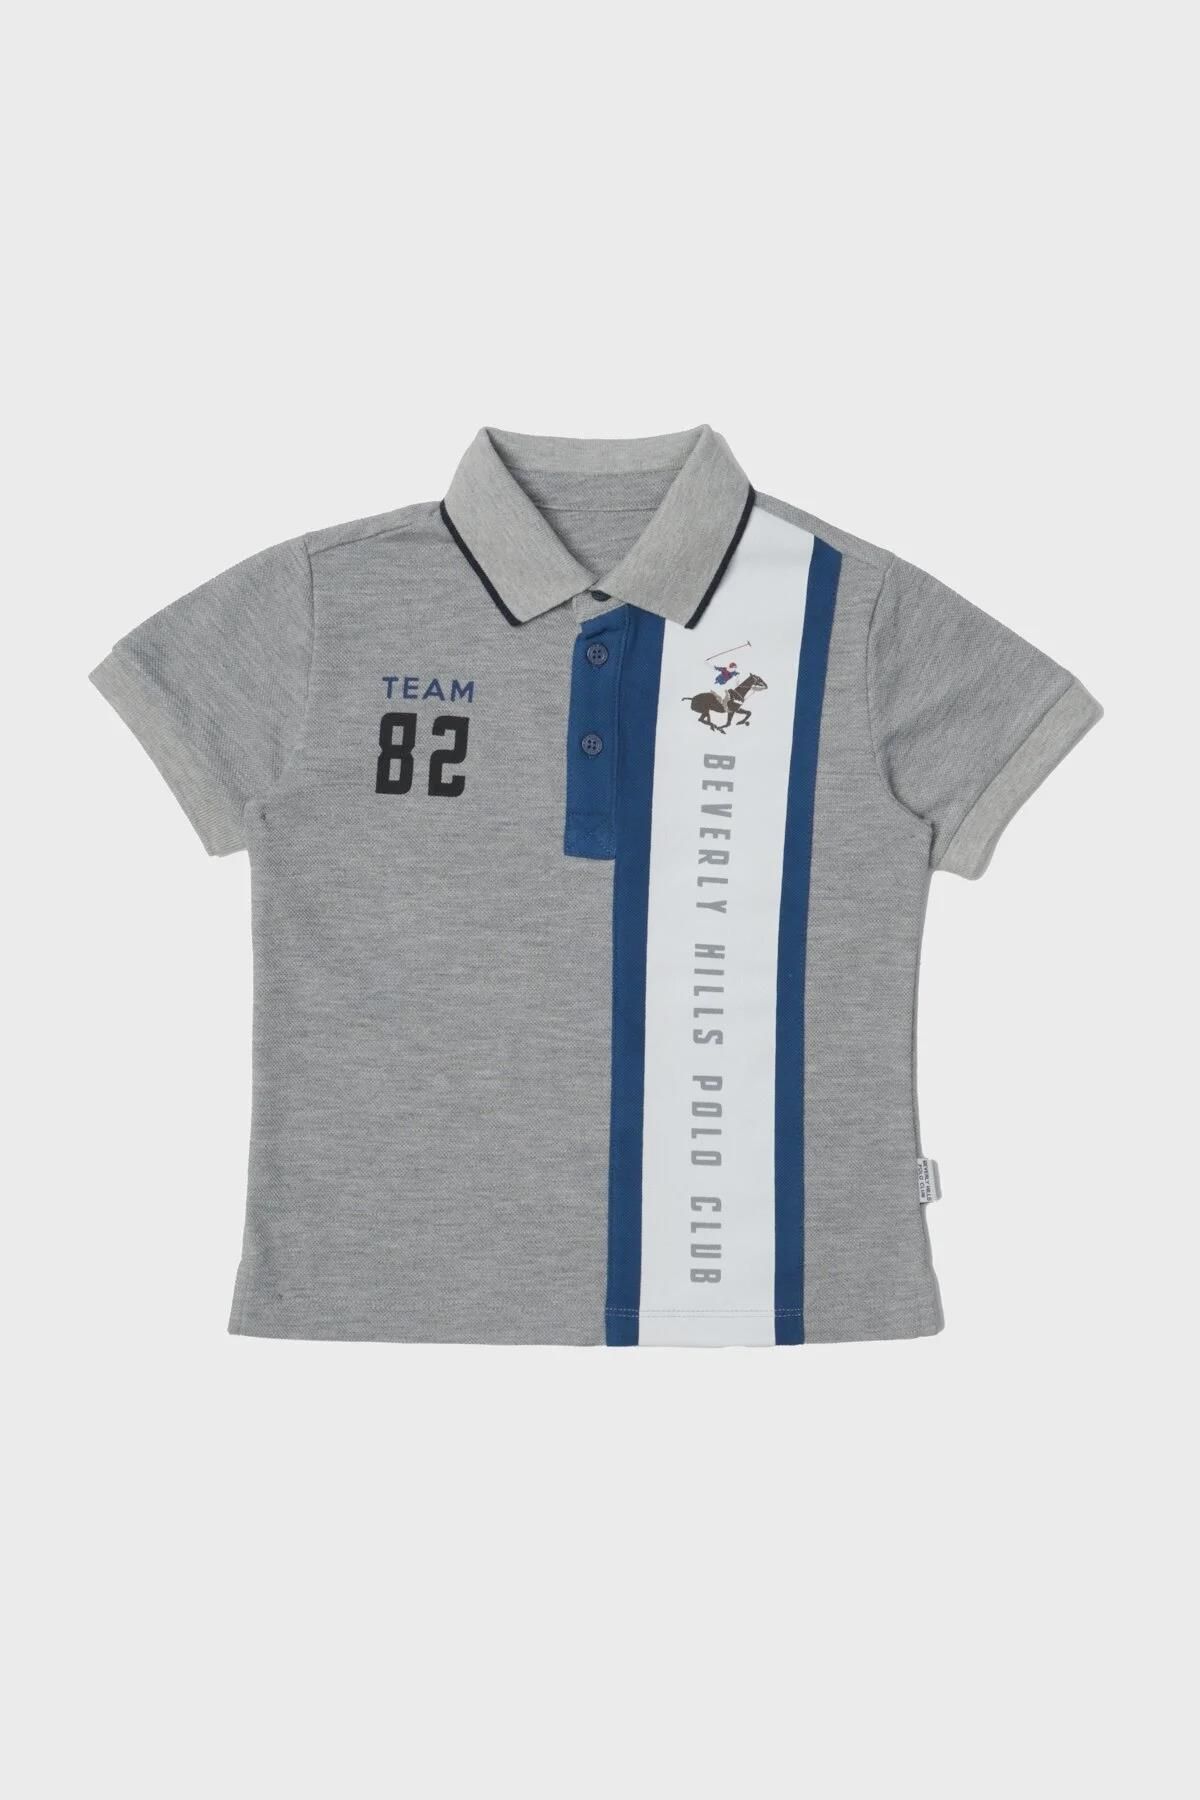 Beverly Hills Polo Club Bg Store Erkek Çocuk Gri T-shirt 23ss2bhb516